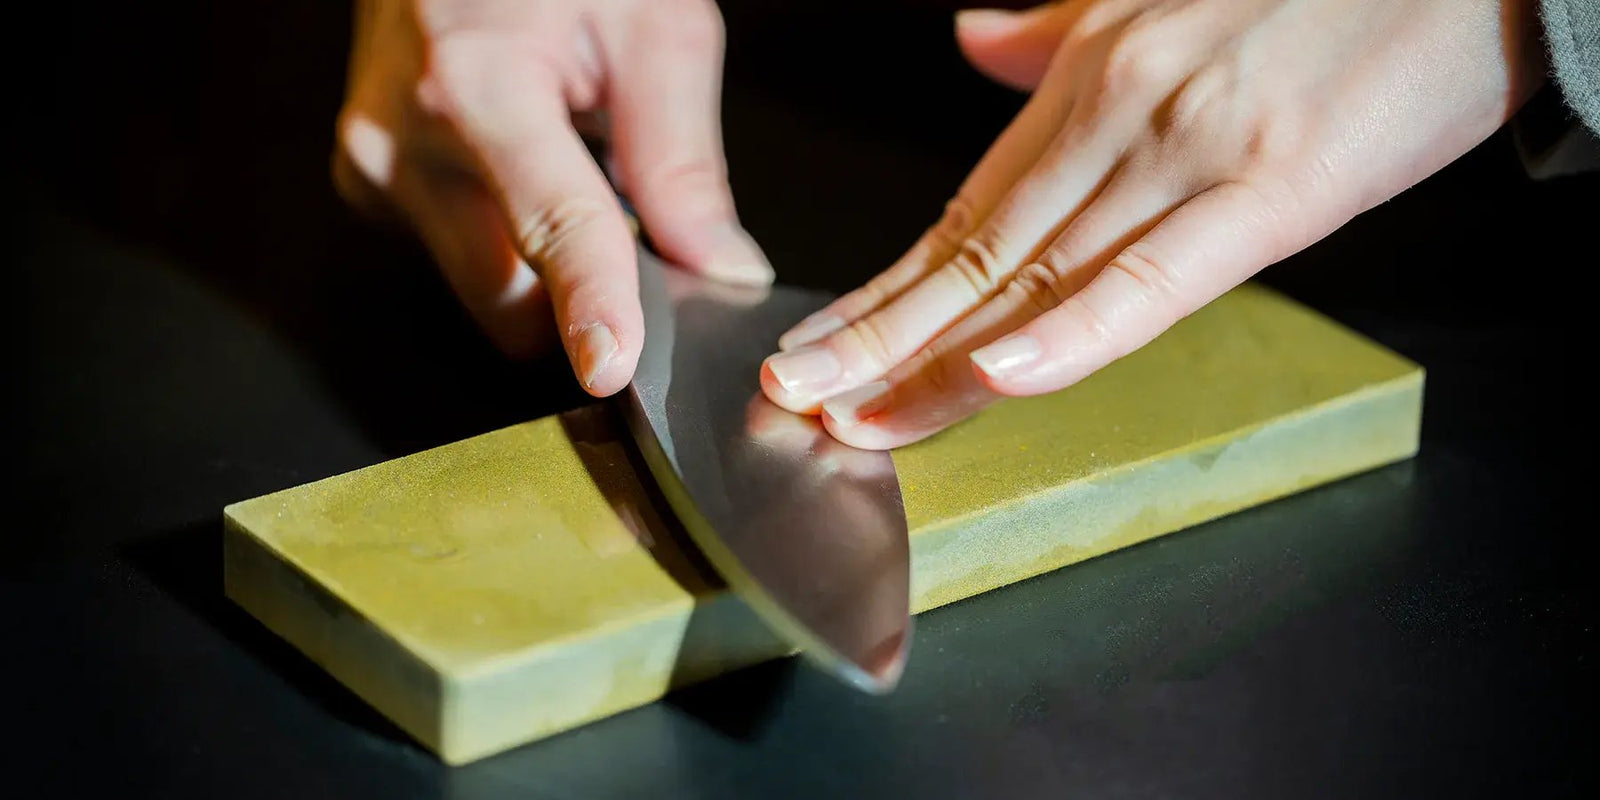 GLESTAIN Ceramic Hexagonal Sharpening Rod - Globalkitchen Japan